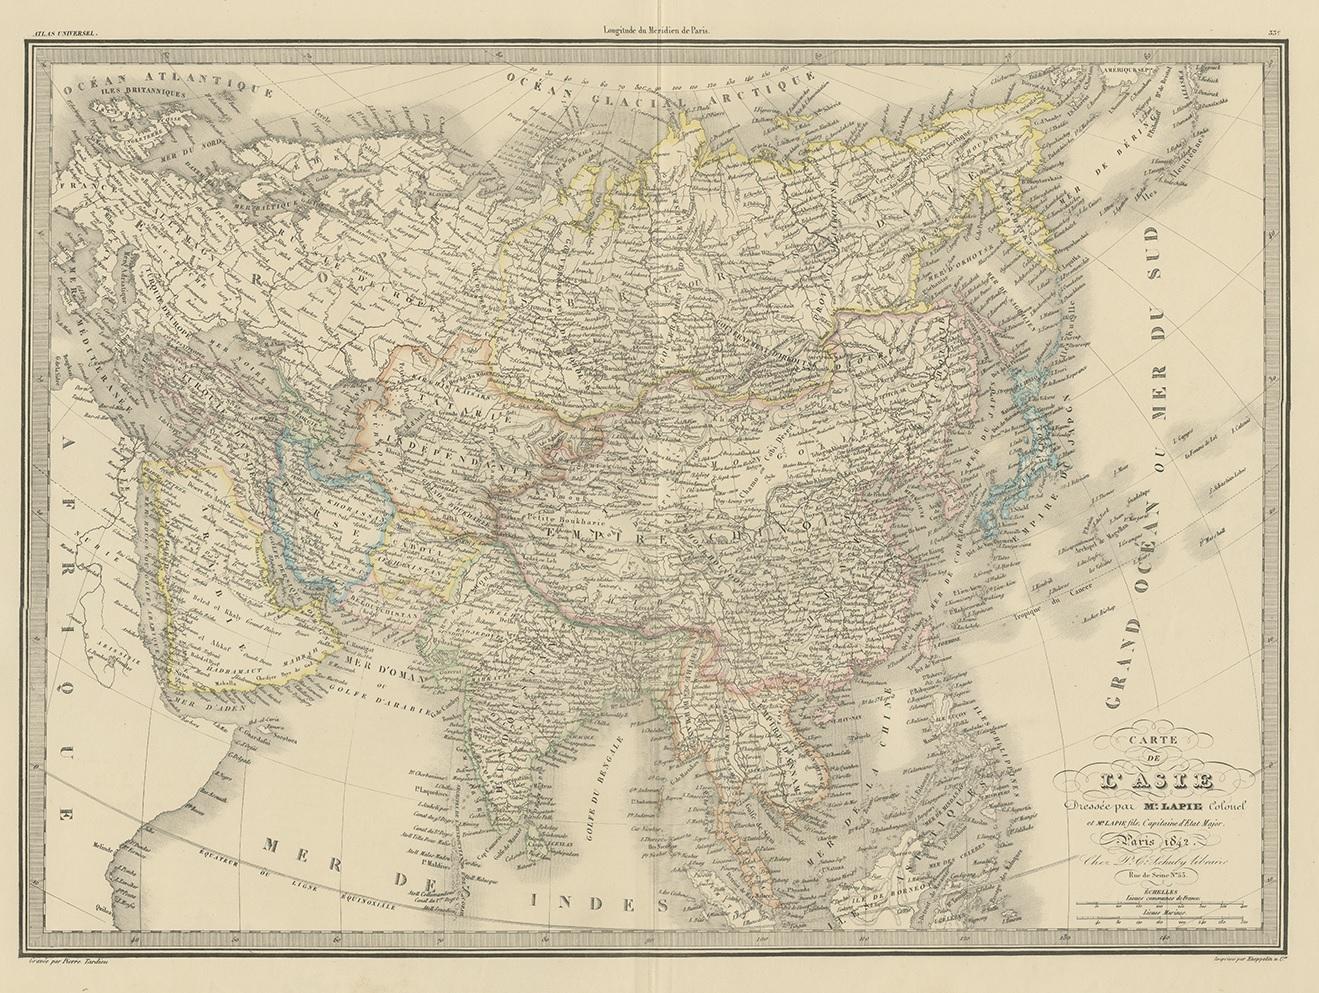 Antique map titled 'Carte de l'Asie'. Map of Asia. This map originates from 'Atlas universel de géographie ancienne et moderne (..)' by Pierre M. Lapie and Alexandre E. Lapie. Pierre M. Lapie was a French cartographer and engraver. He was the father